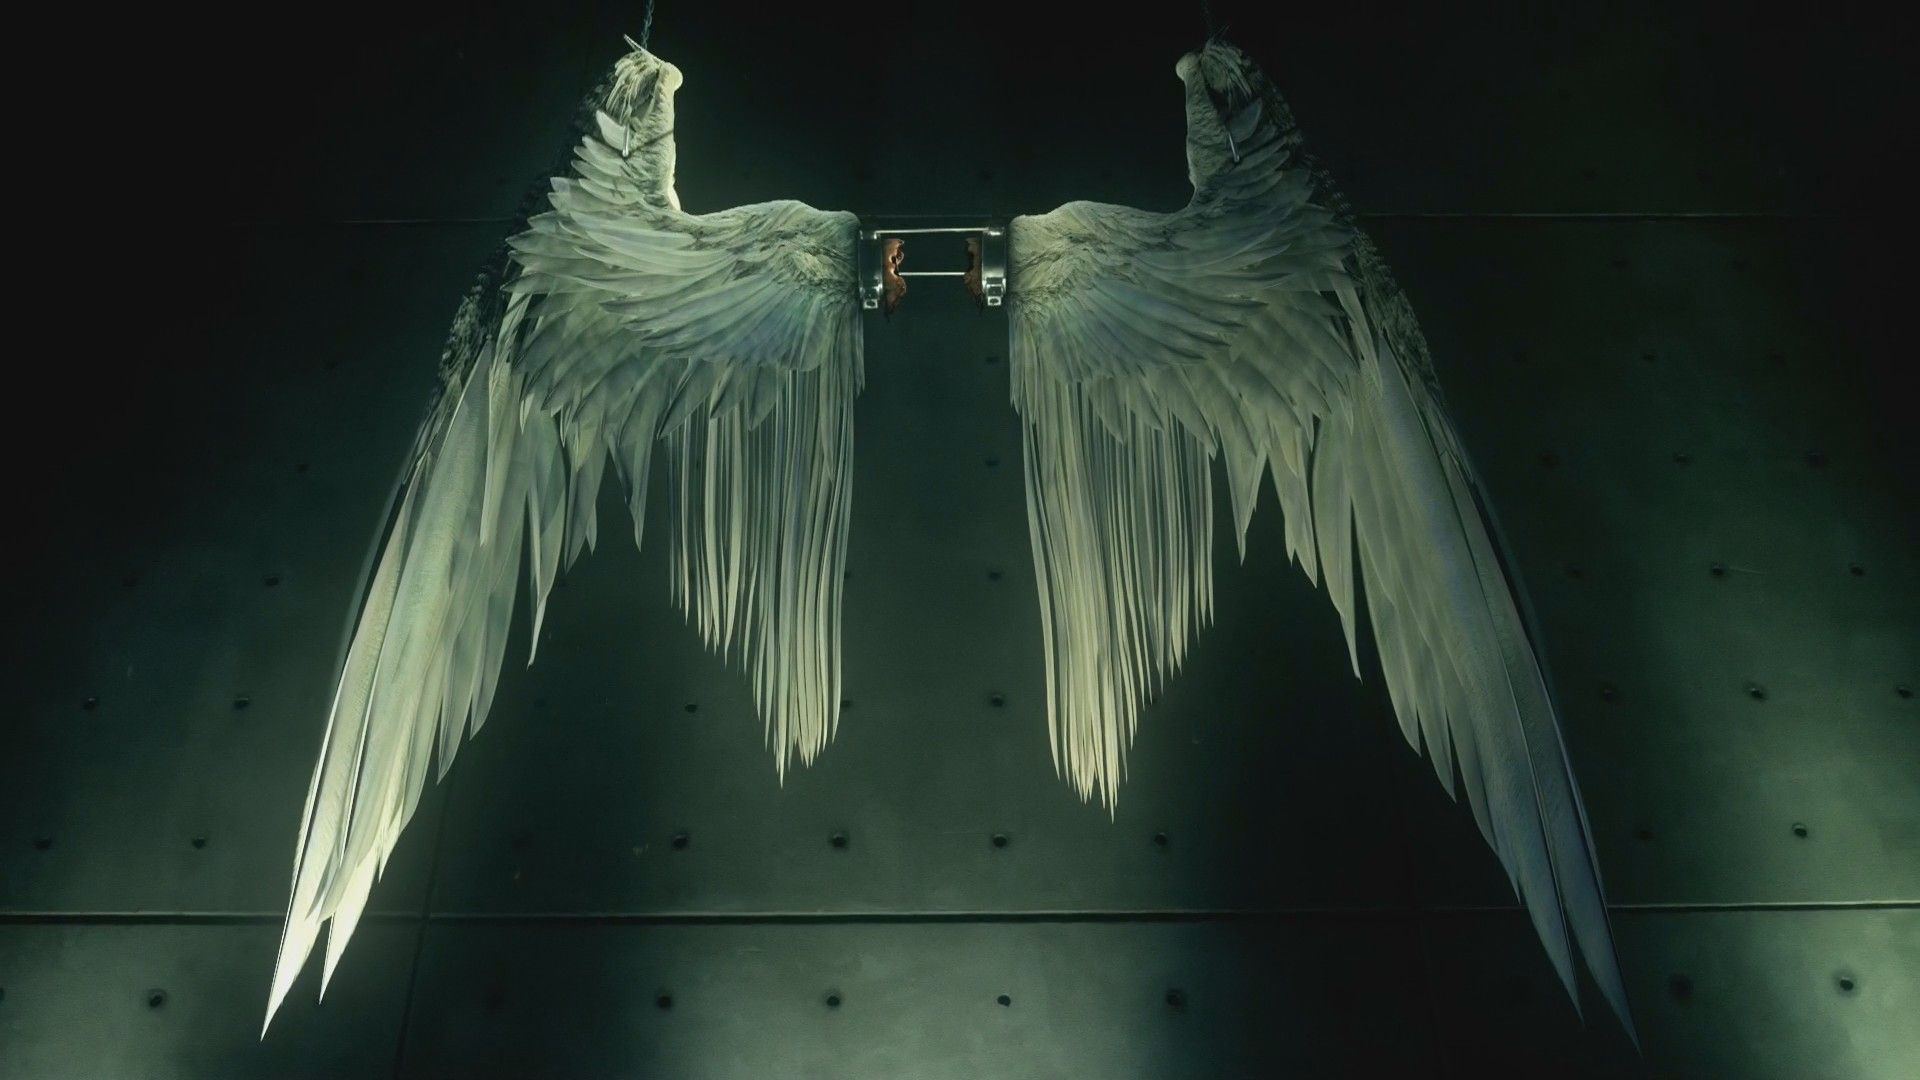 Lucifer's wings